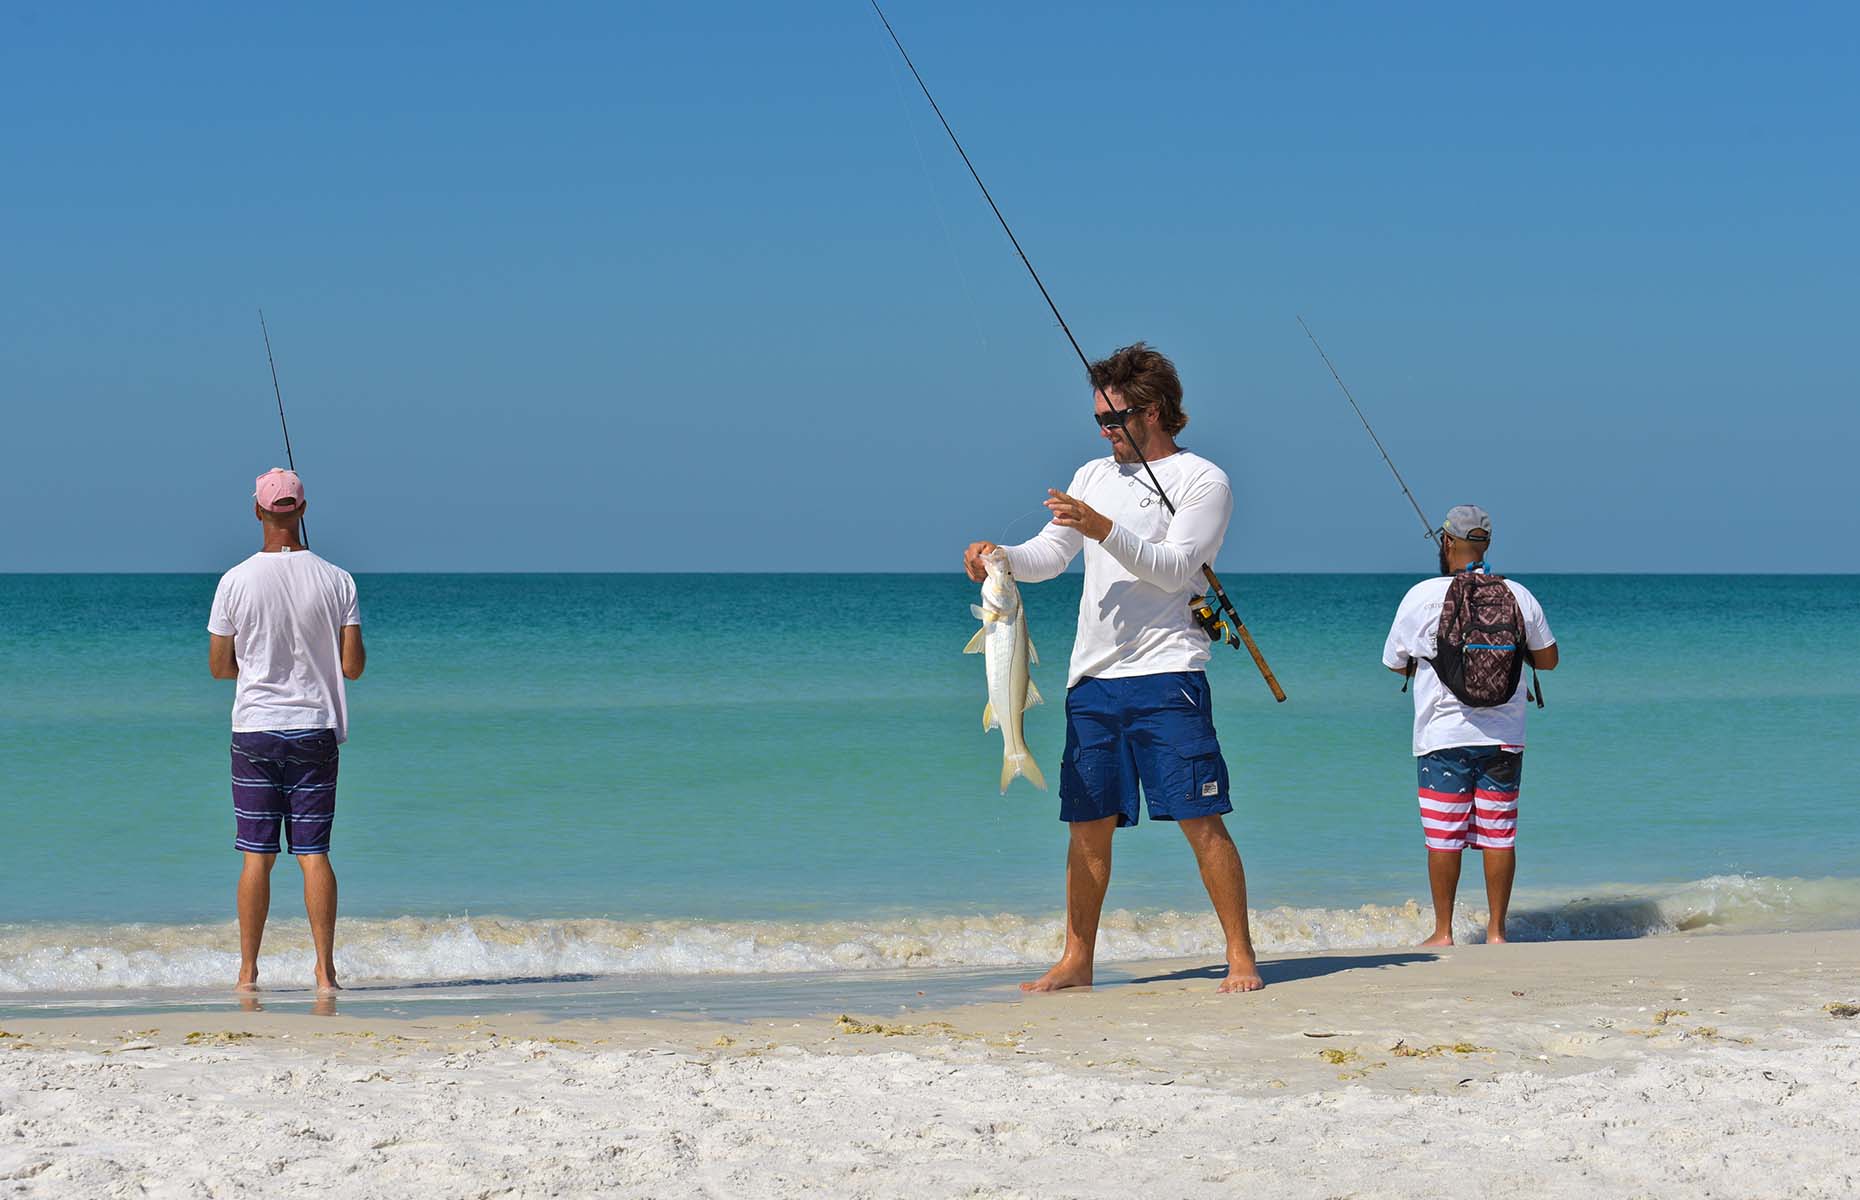 Fishing on Florida's Sports Coast (Image: Mark Winfrey/Shutterstock)